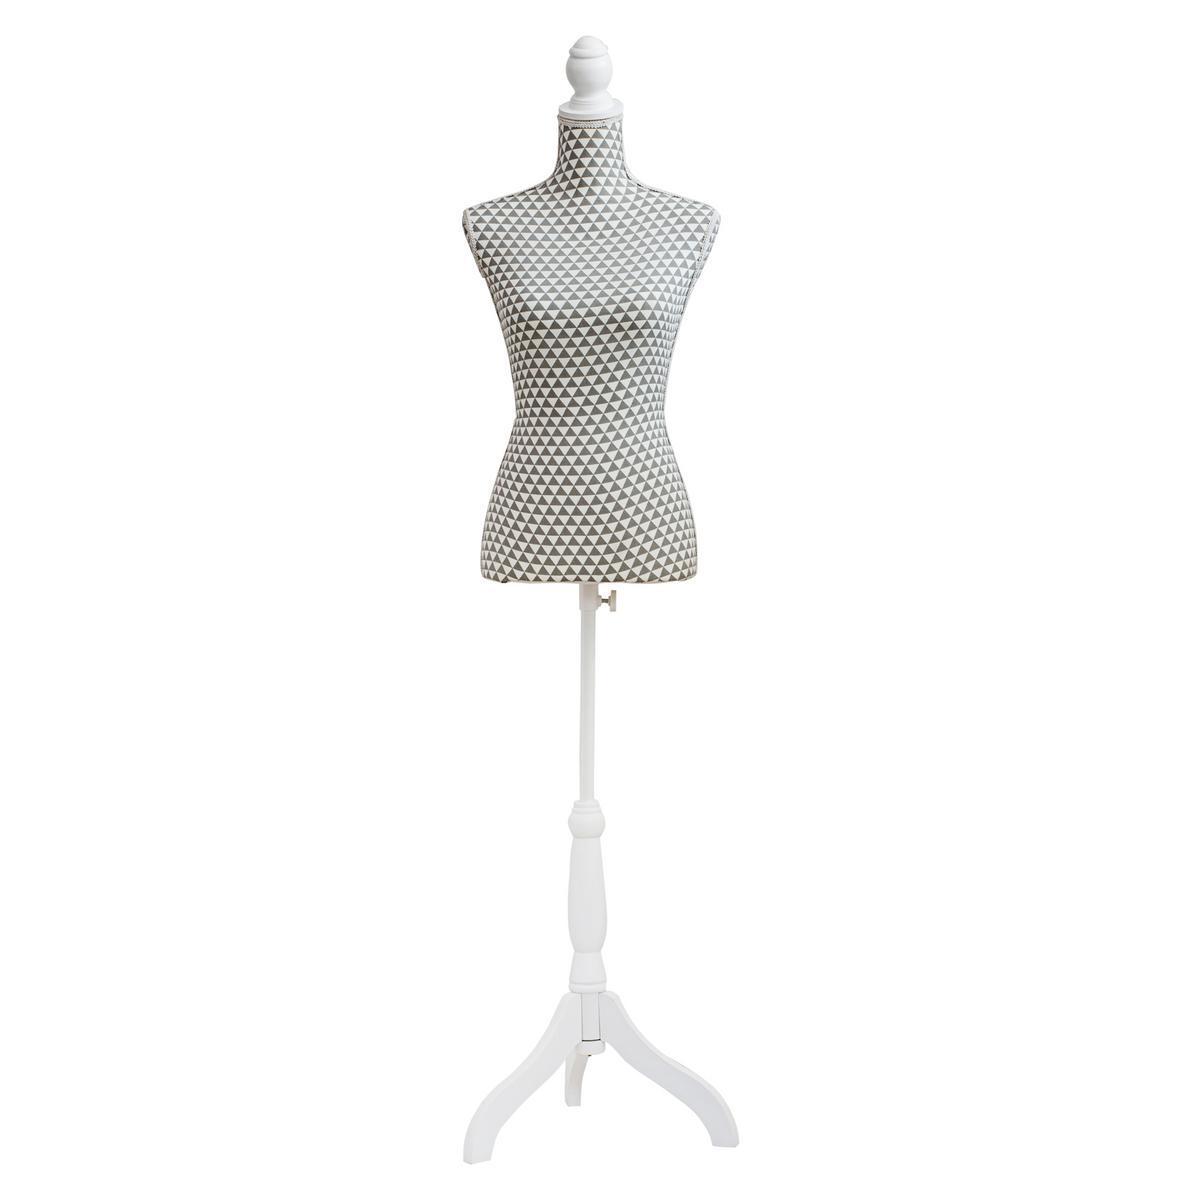 Mannequin sur pied - MDF, sapin et tissu - H 168 cm - Blanc